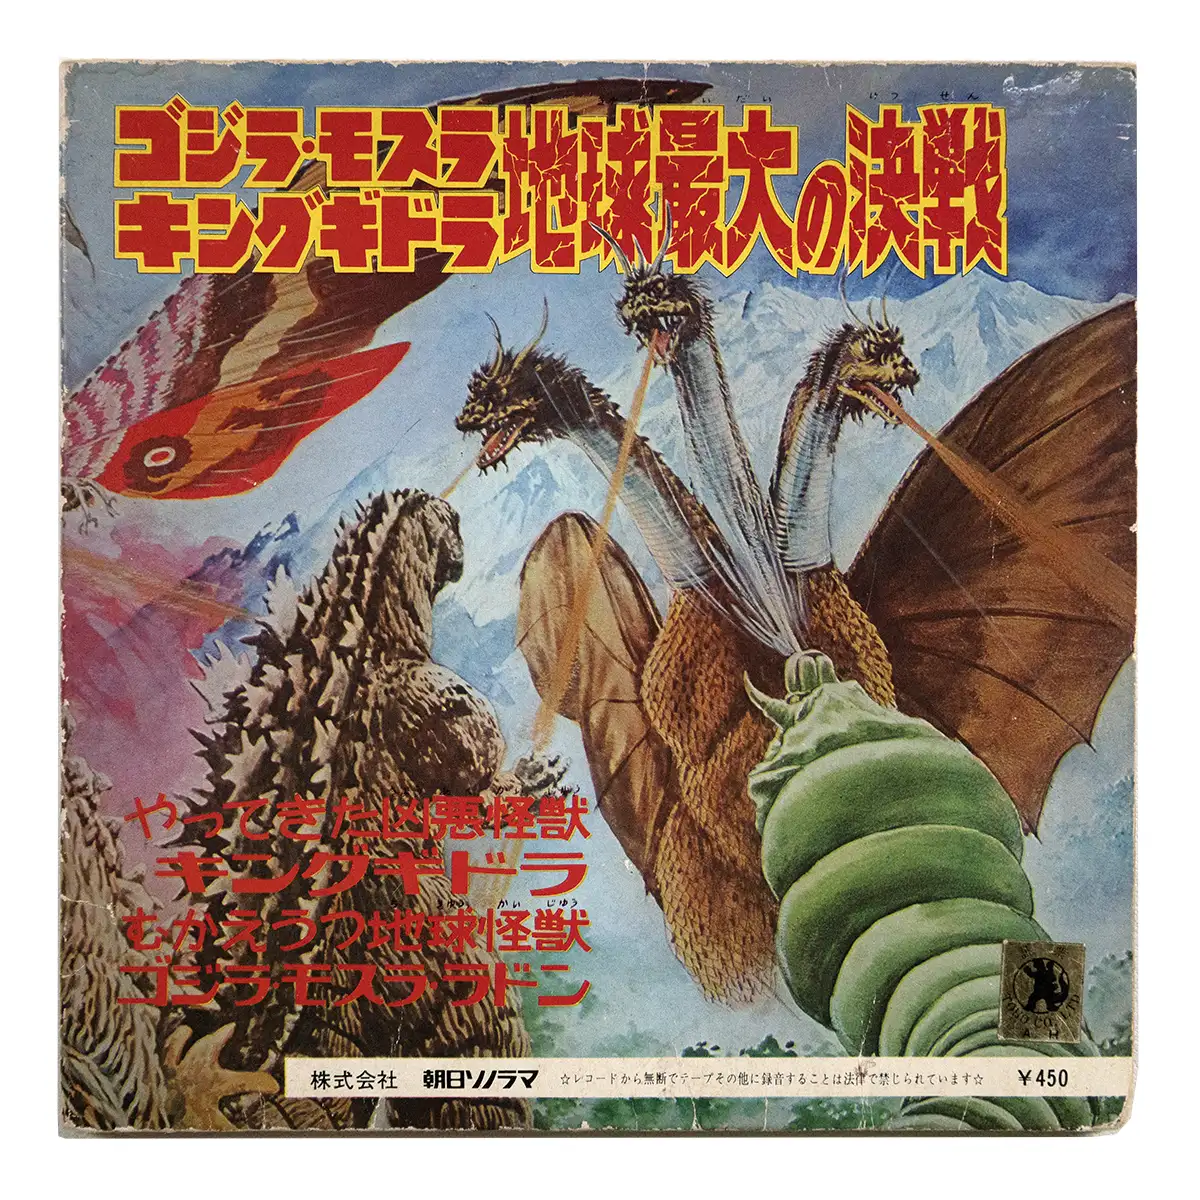 Asahi Sonorama Ghidorah The Three-Headed Monster back cover